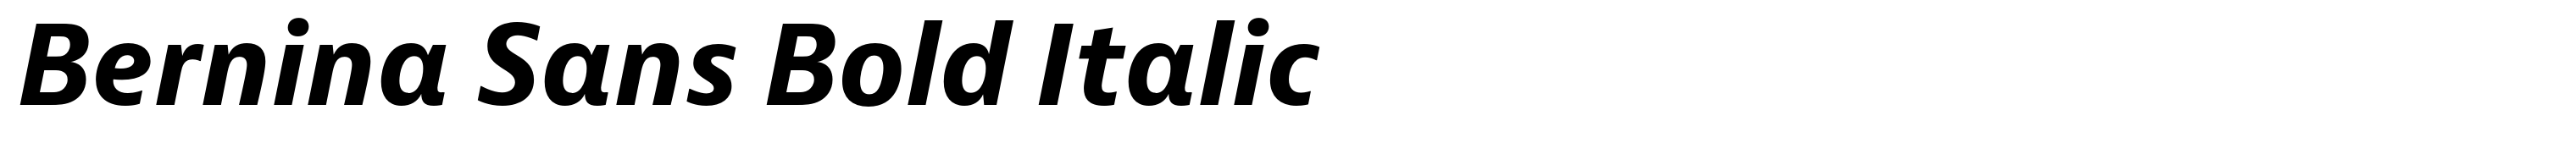 Bernina Sans Bold Italic